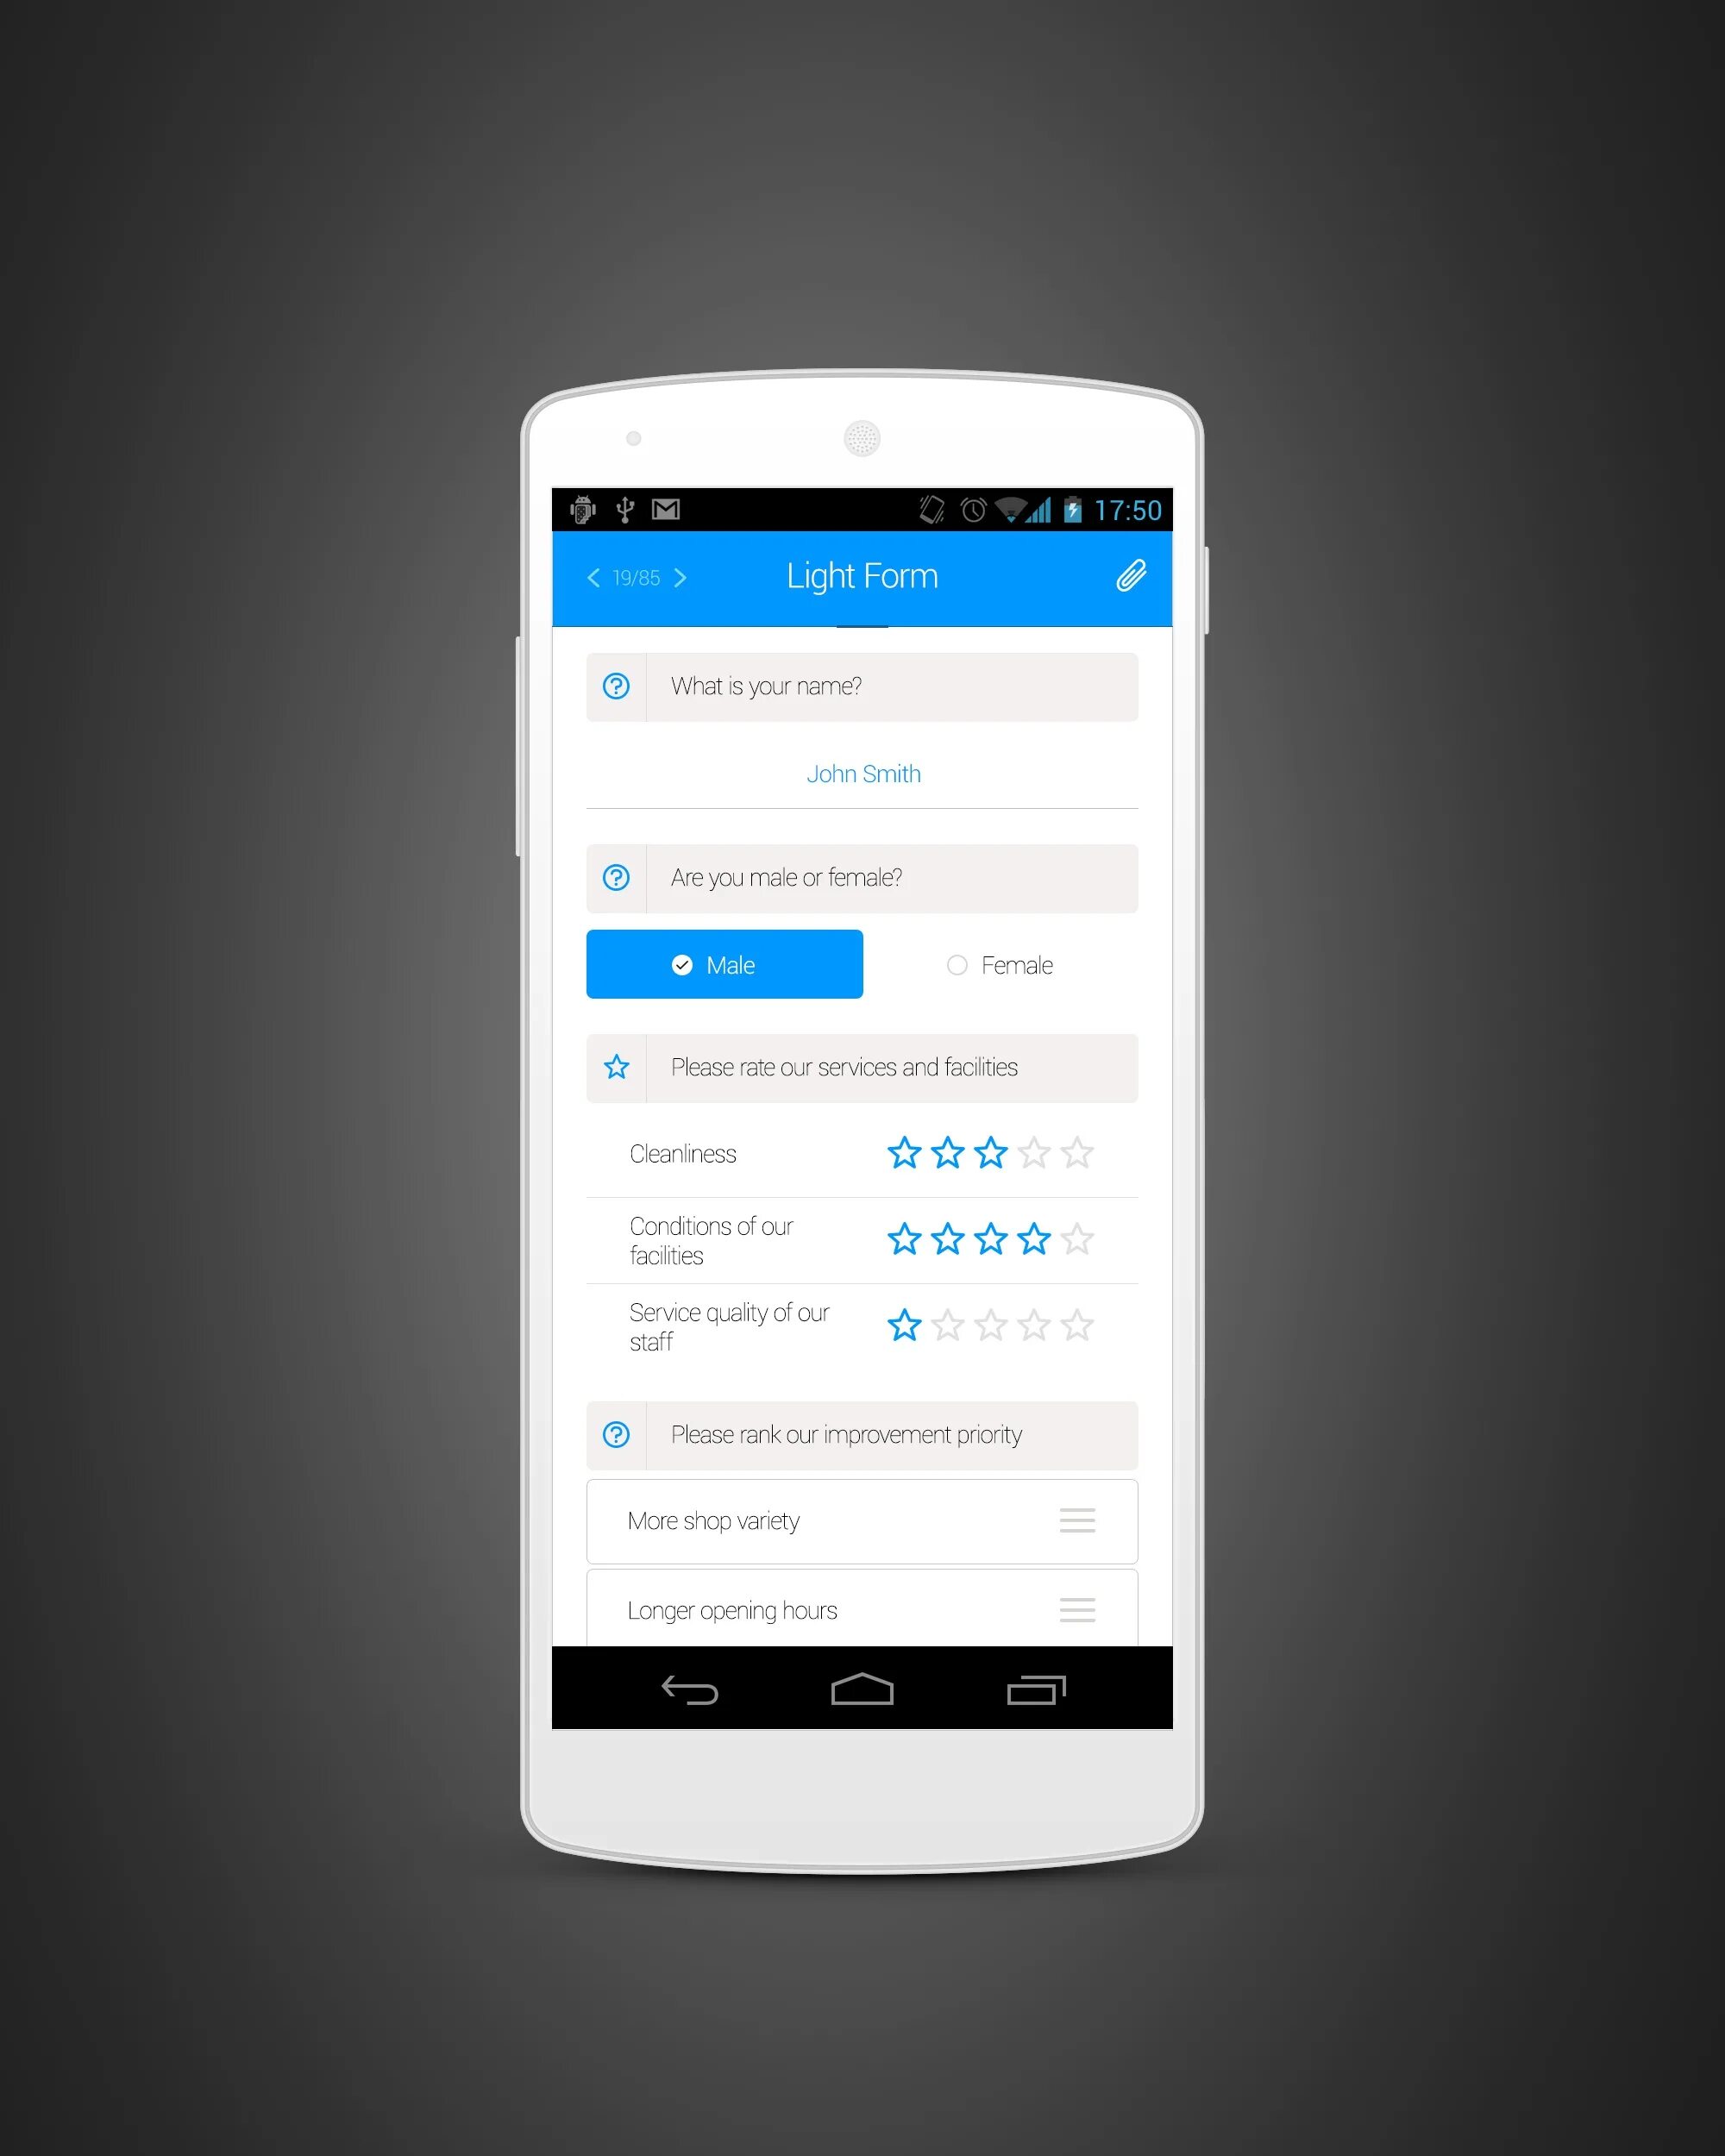 Form light. Интерфейс телефона. Android app UI. Андроид UI XFN. Light на андроид.